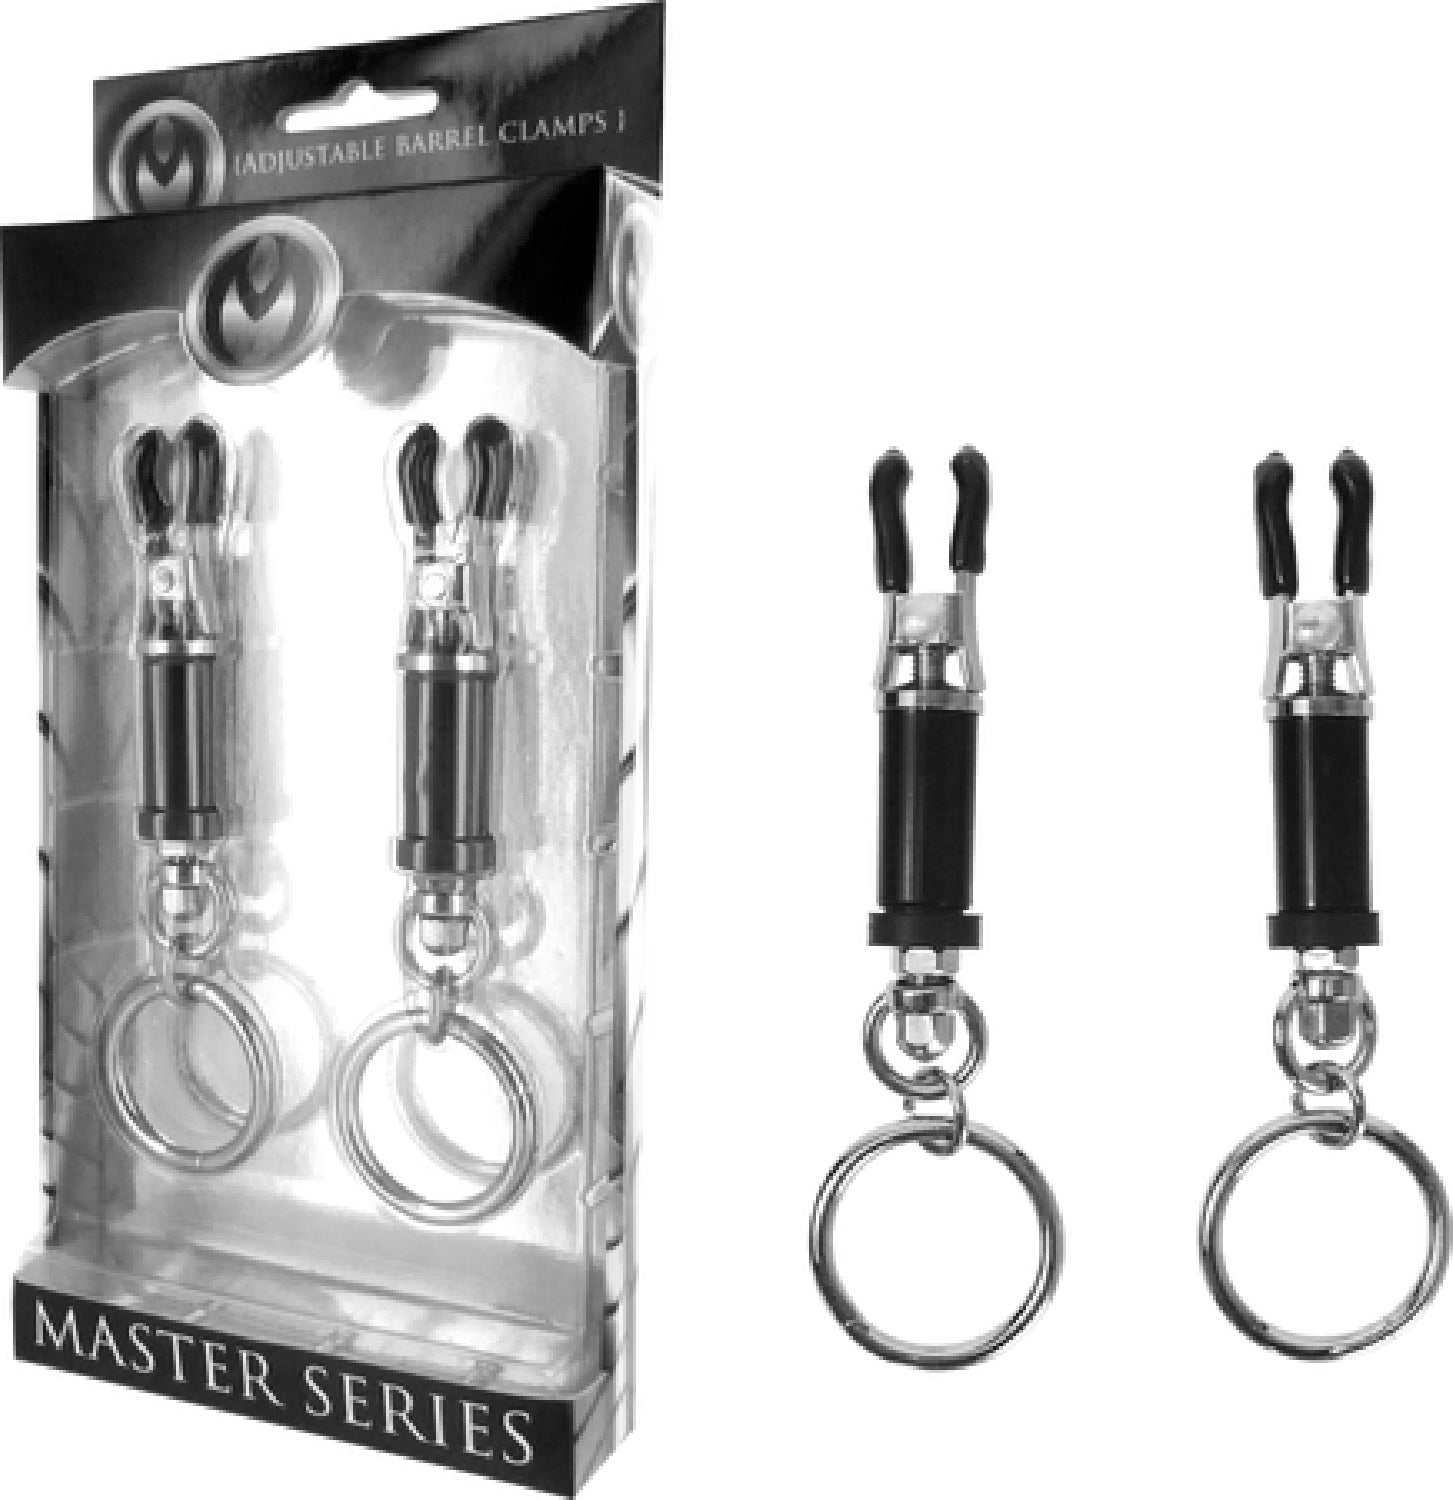 The Master Series - Bondage Ring Barrel Clamps